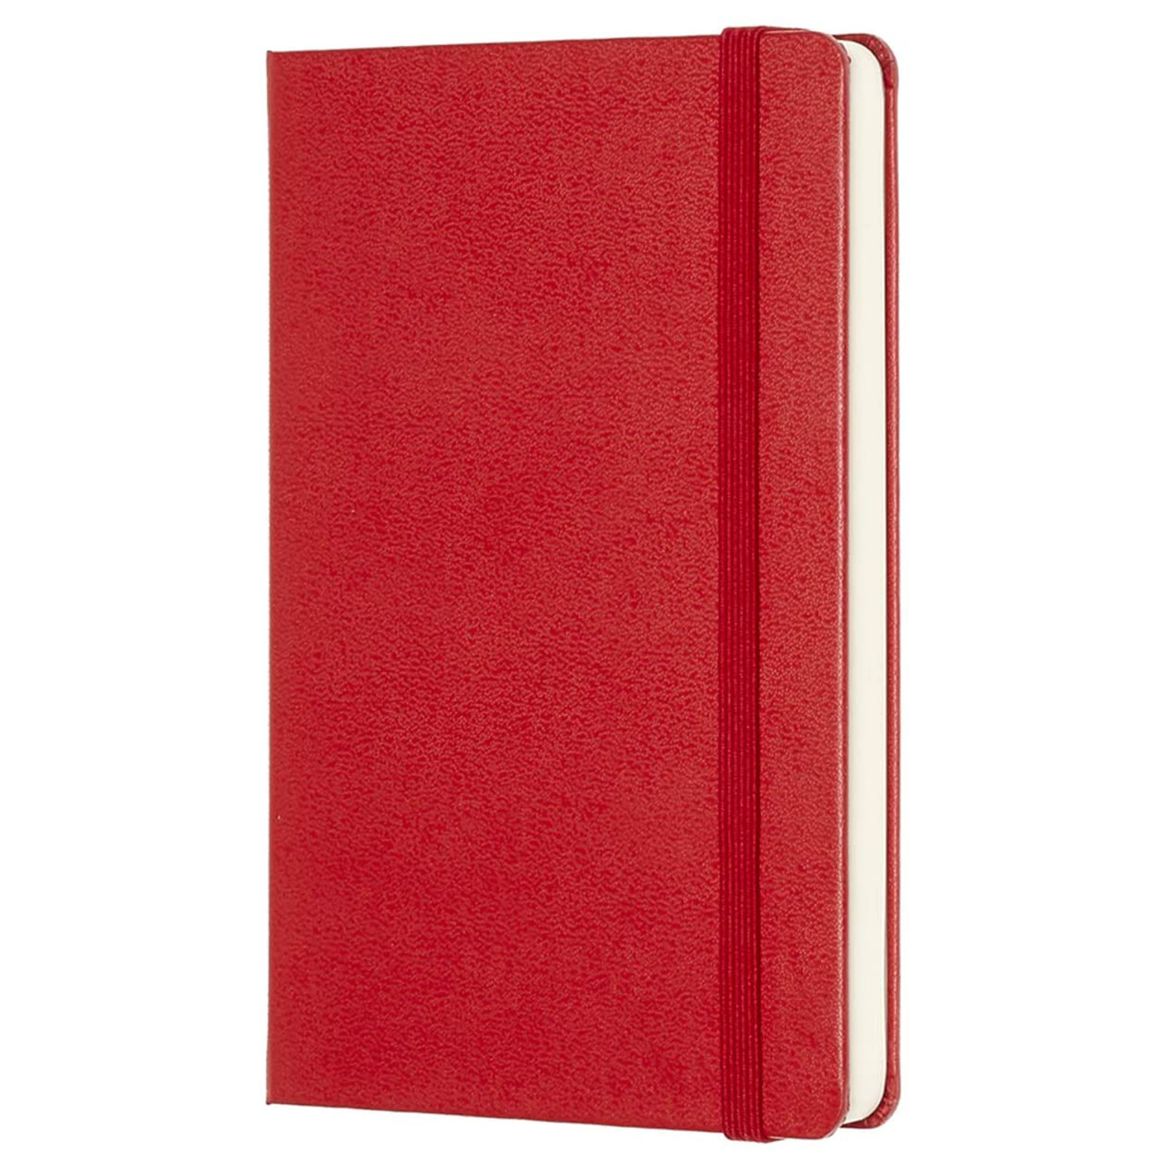 Moleskine Classic Notebook, Pocket, Plain, Red, Hard Cover (3.5 x 5.5)